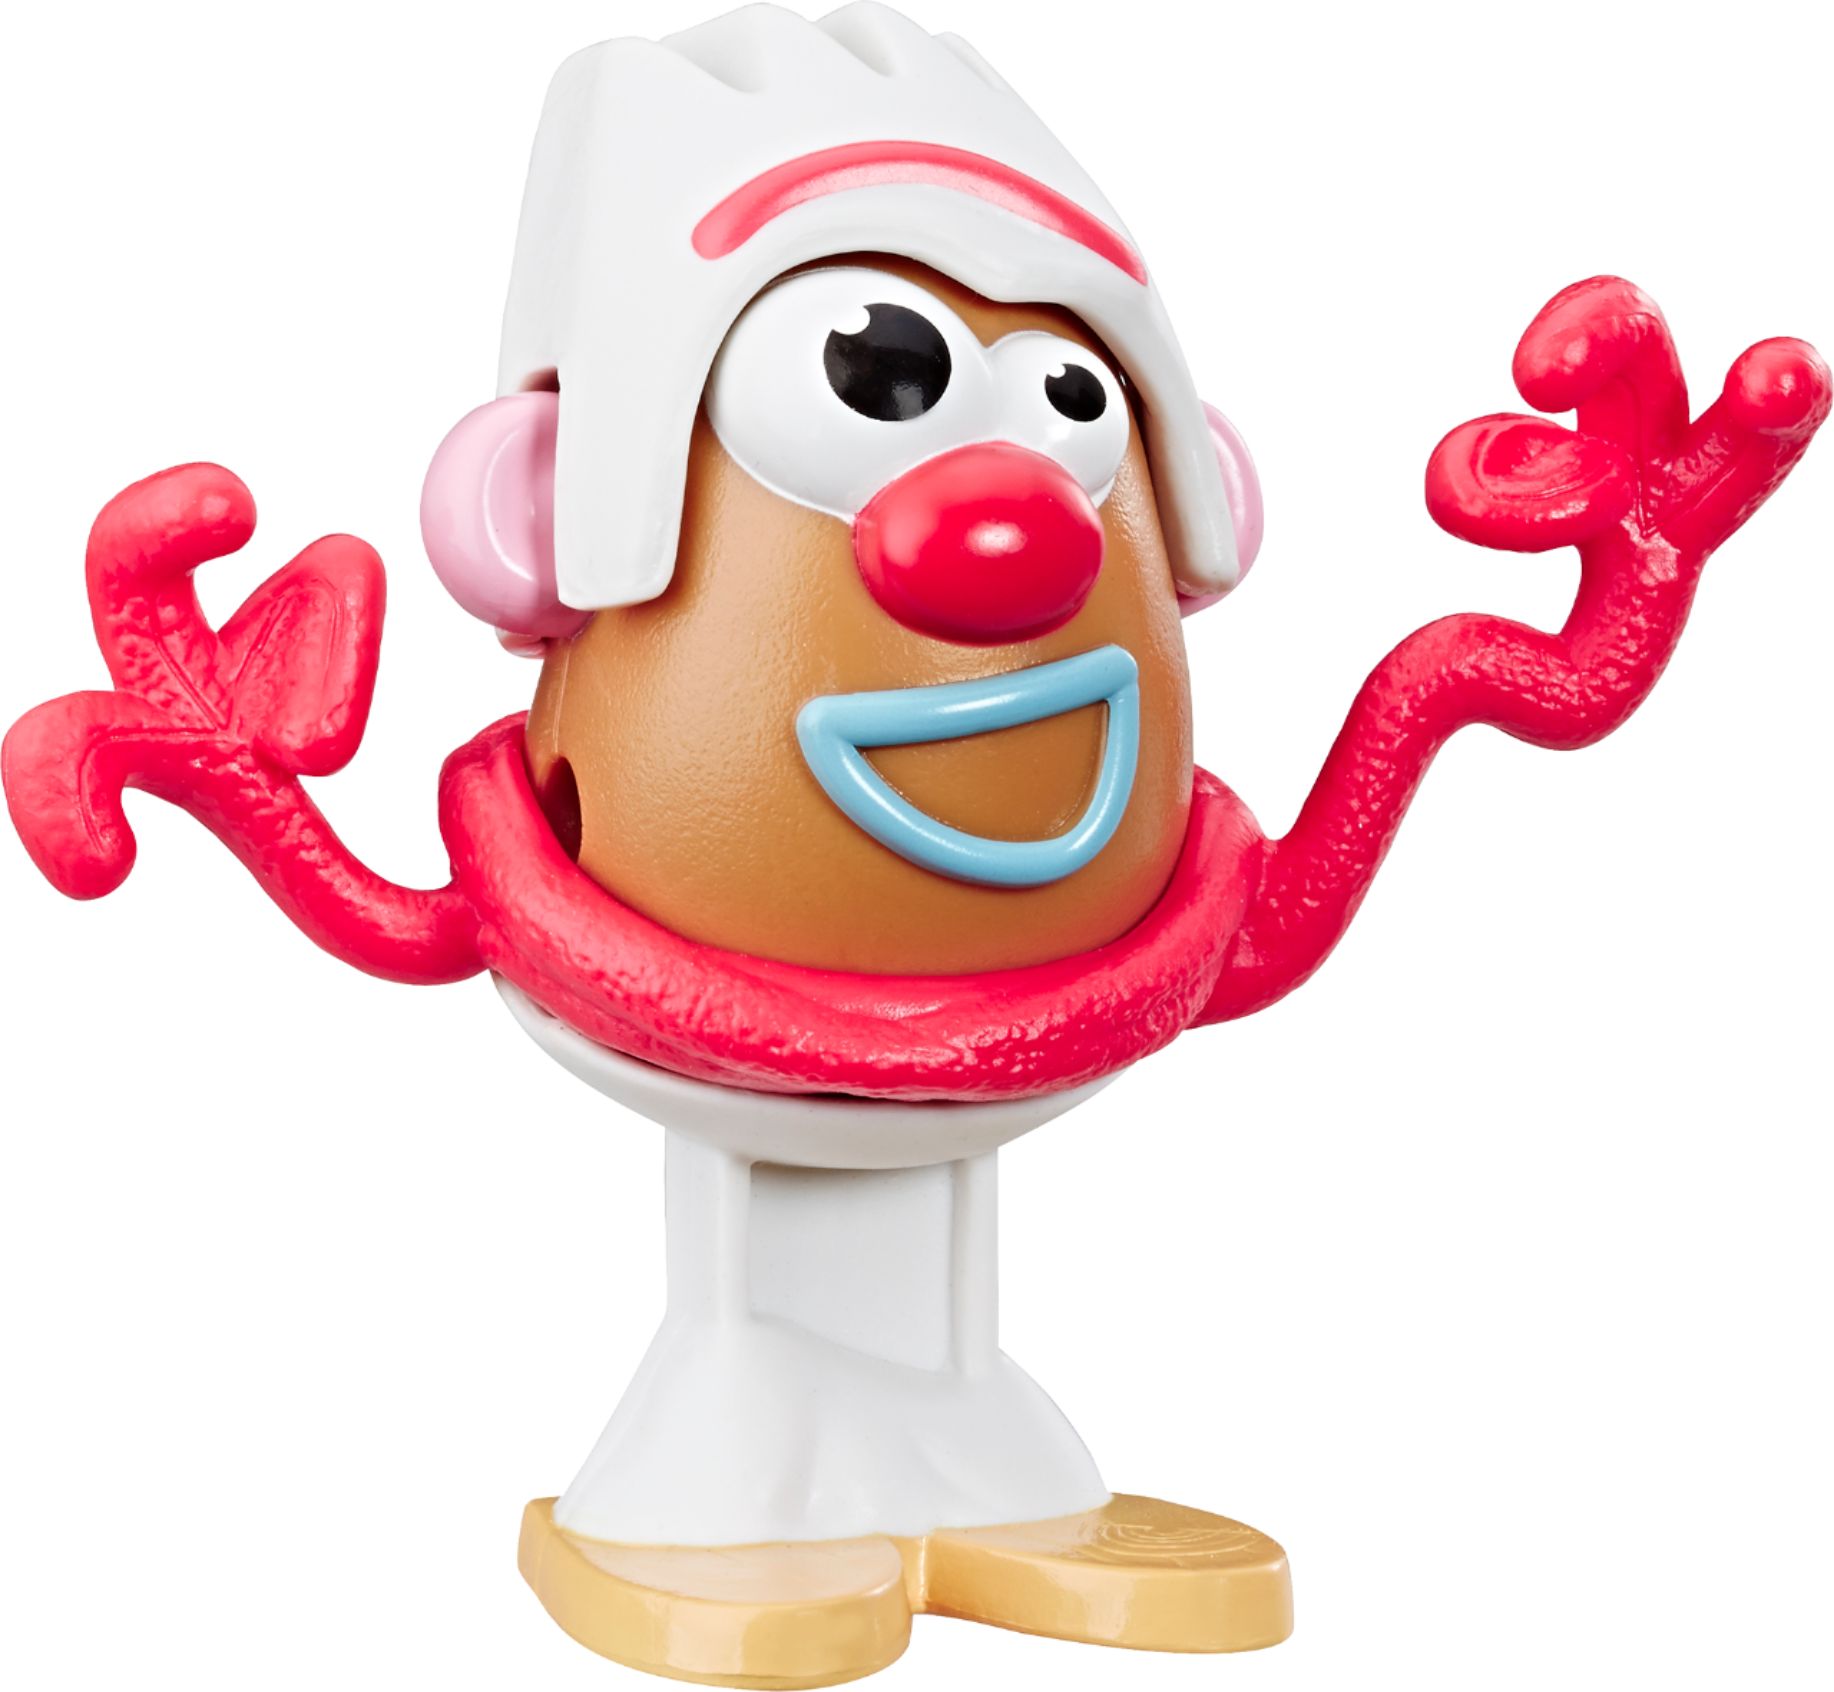 Hasbro Mr Potato Head Toy for sale online 